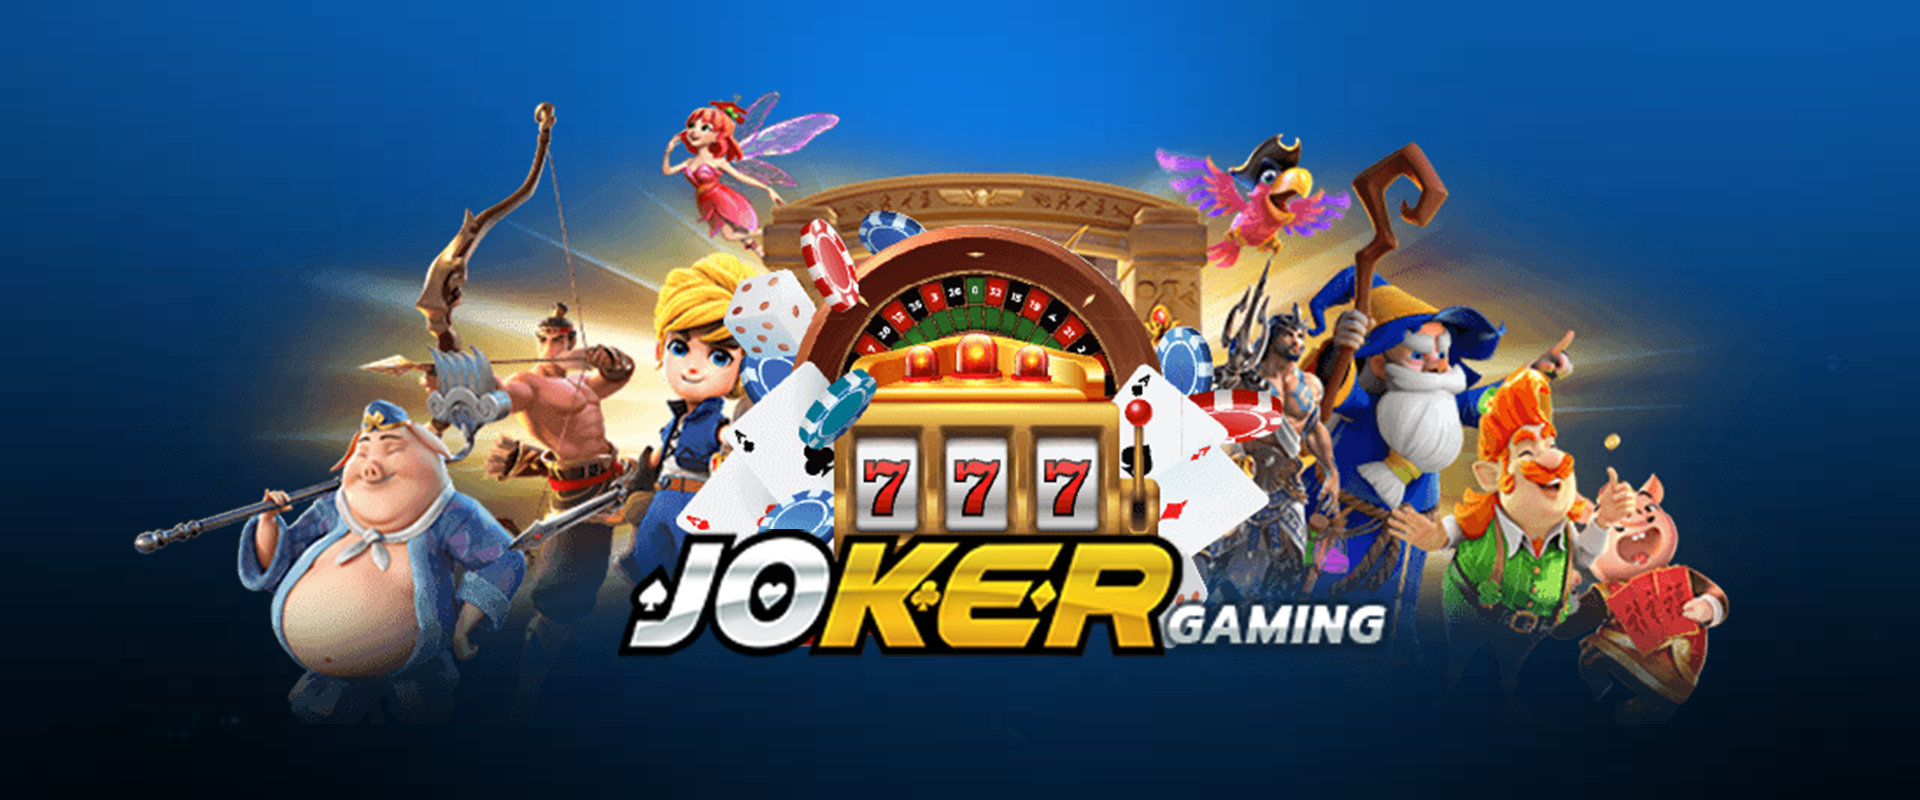 Papi4d.com: Register Joker123 to Get the Biggest Jackpot